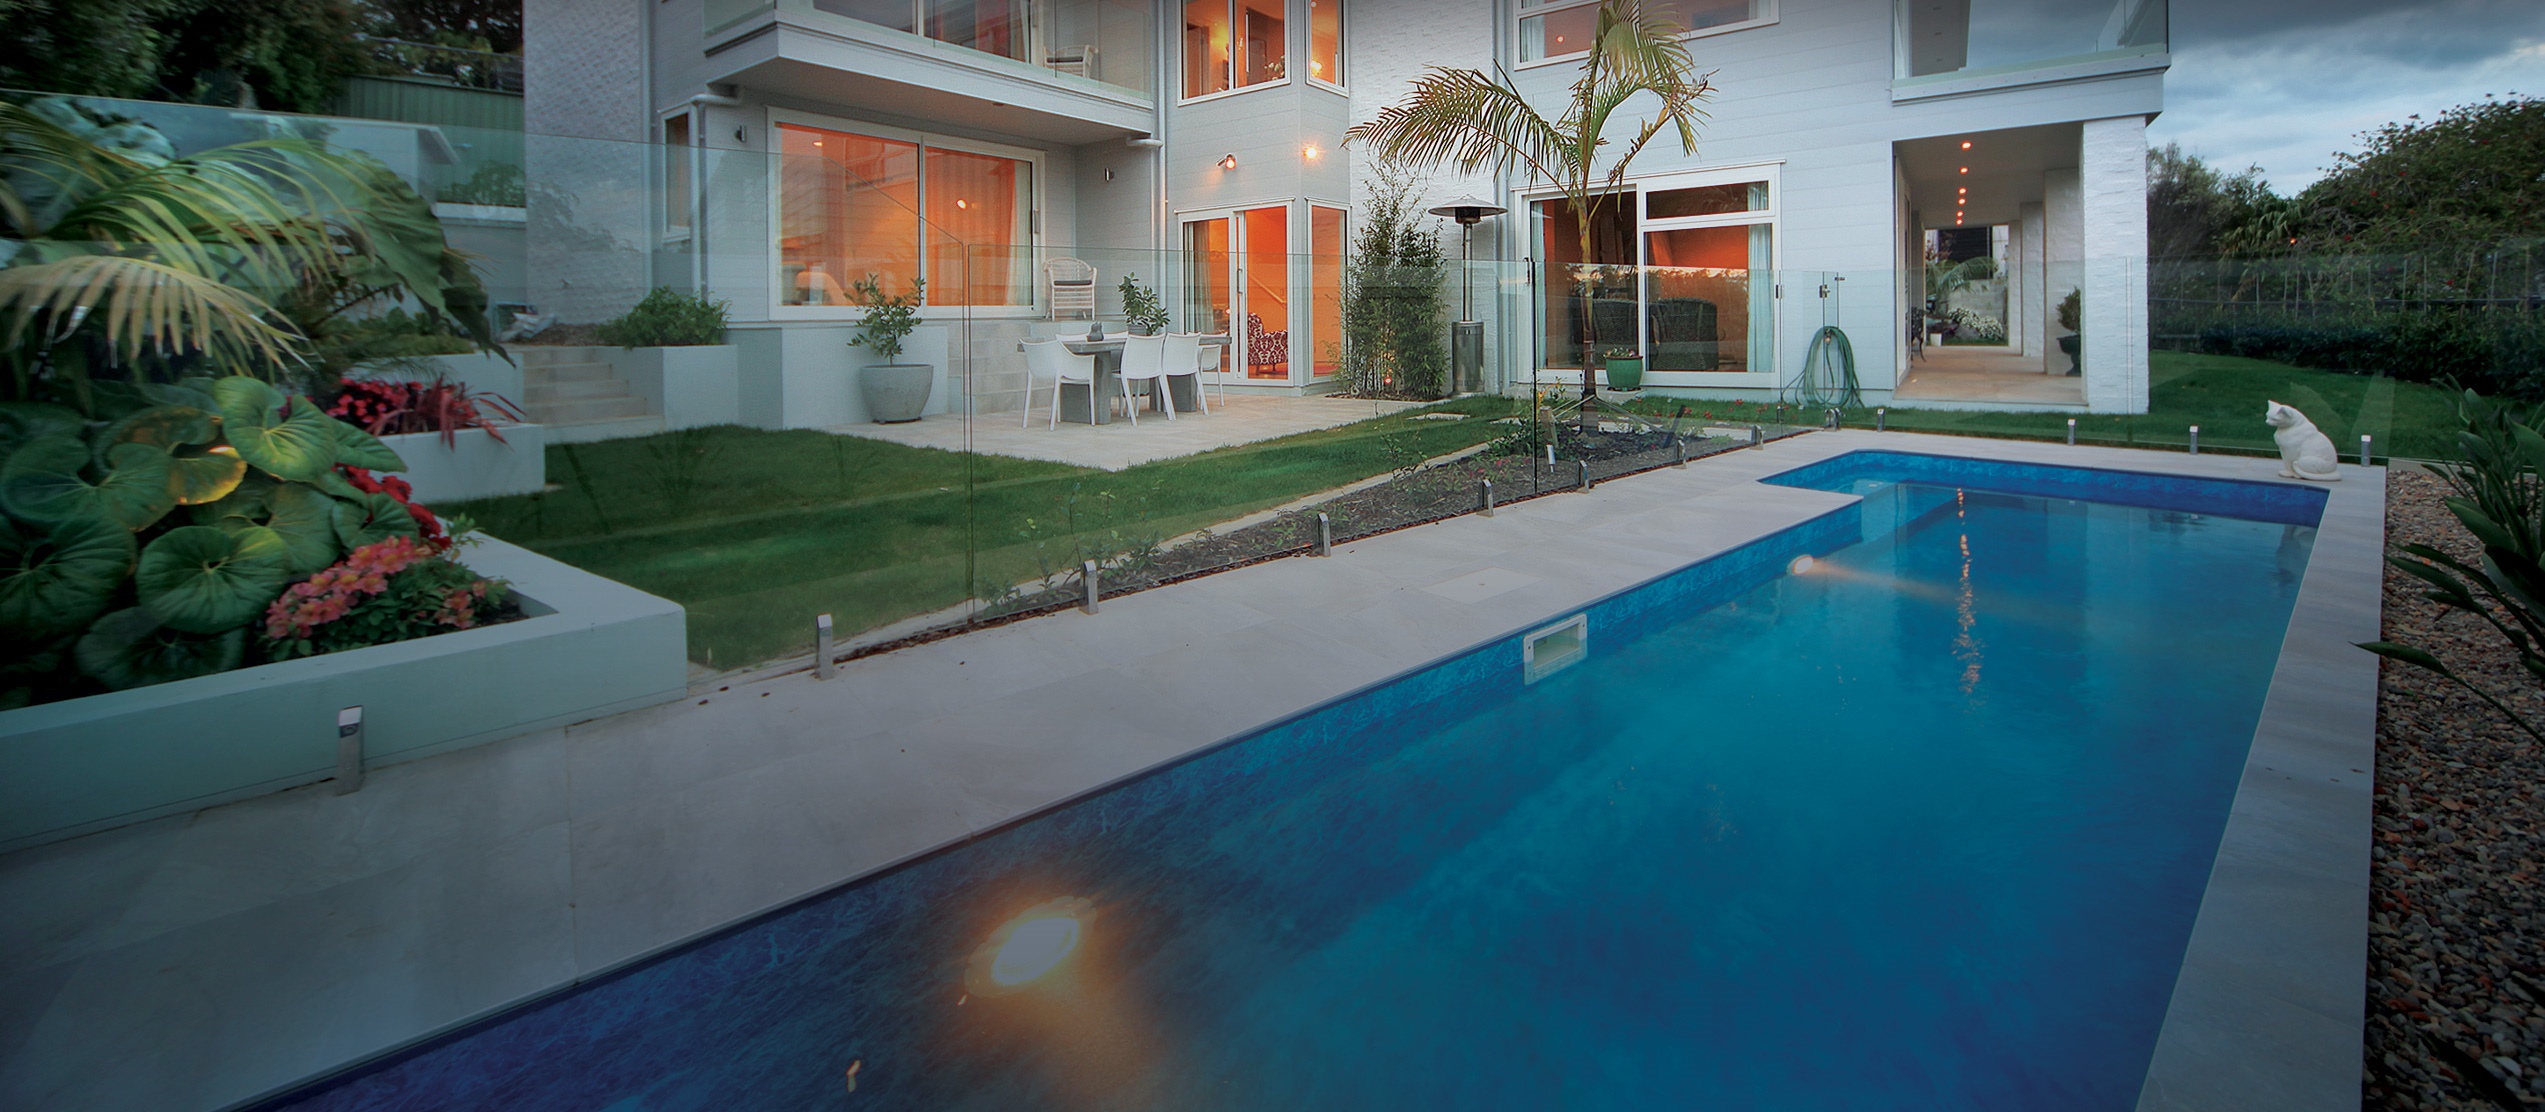 Custom designed and built inground swimming pool built in Whangarei